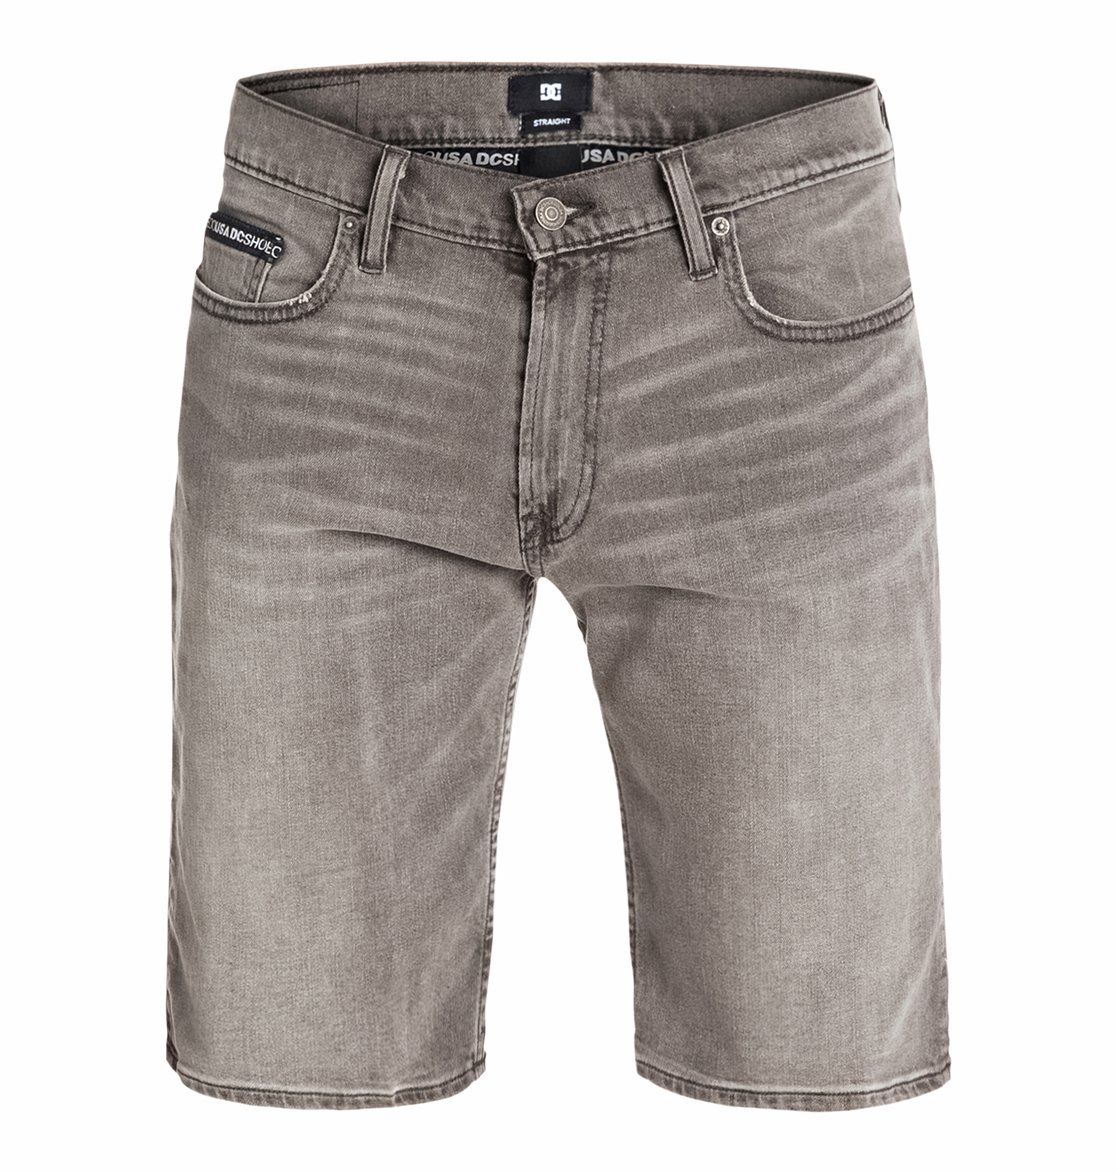 Worker Straight Denim Shorts Grey stone - Dcshoes   Wkr Straight Dnm Shorts Grst  DC Shoes -     2015. :   ,  ,    DC.<br>